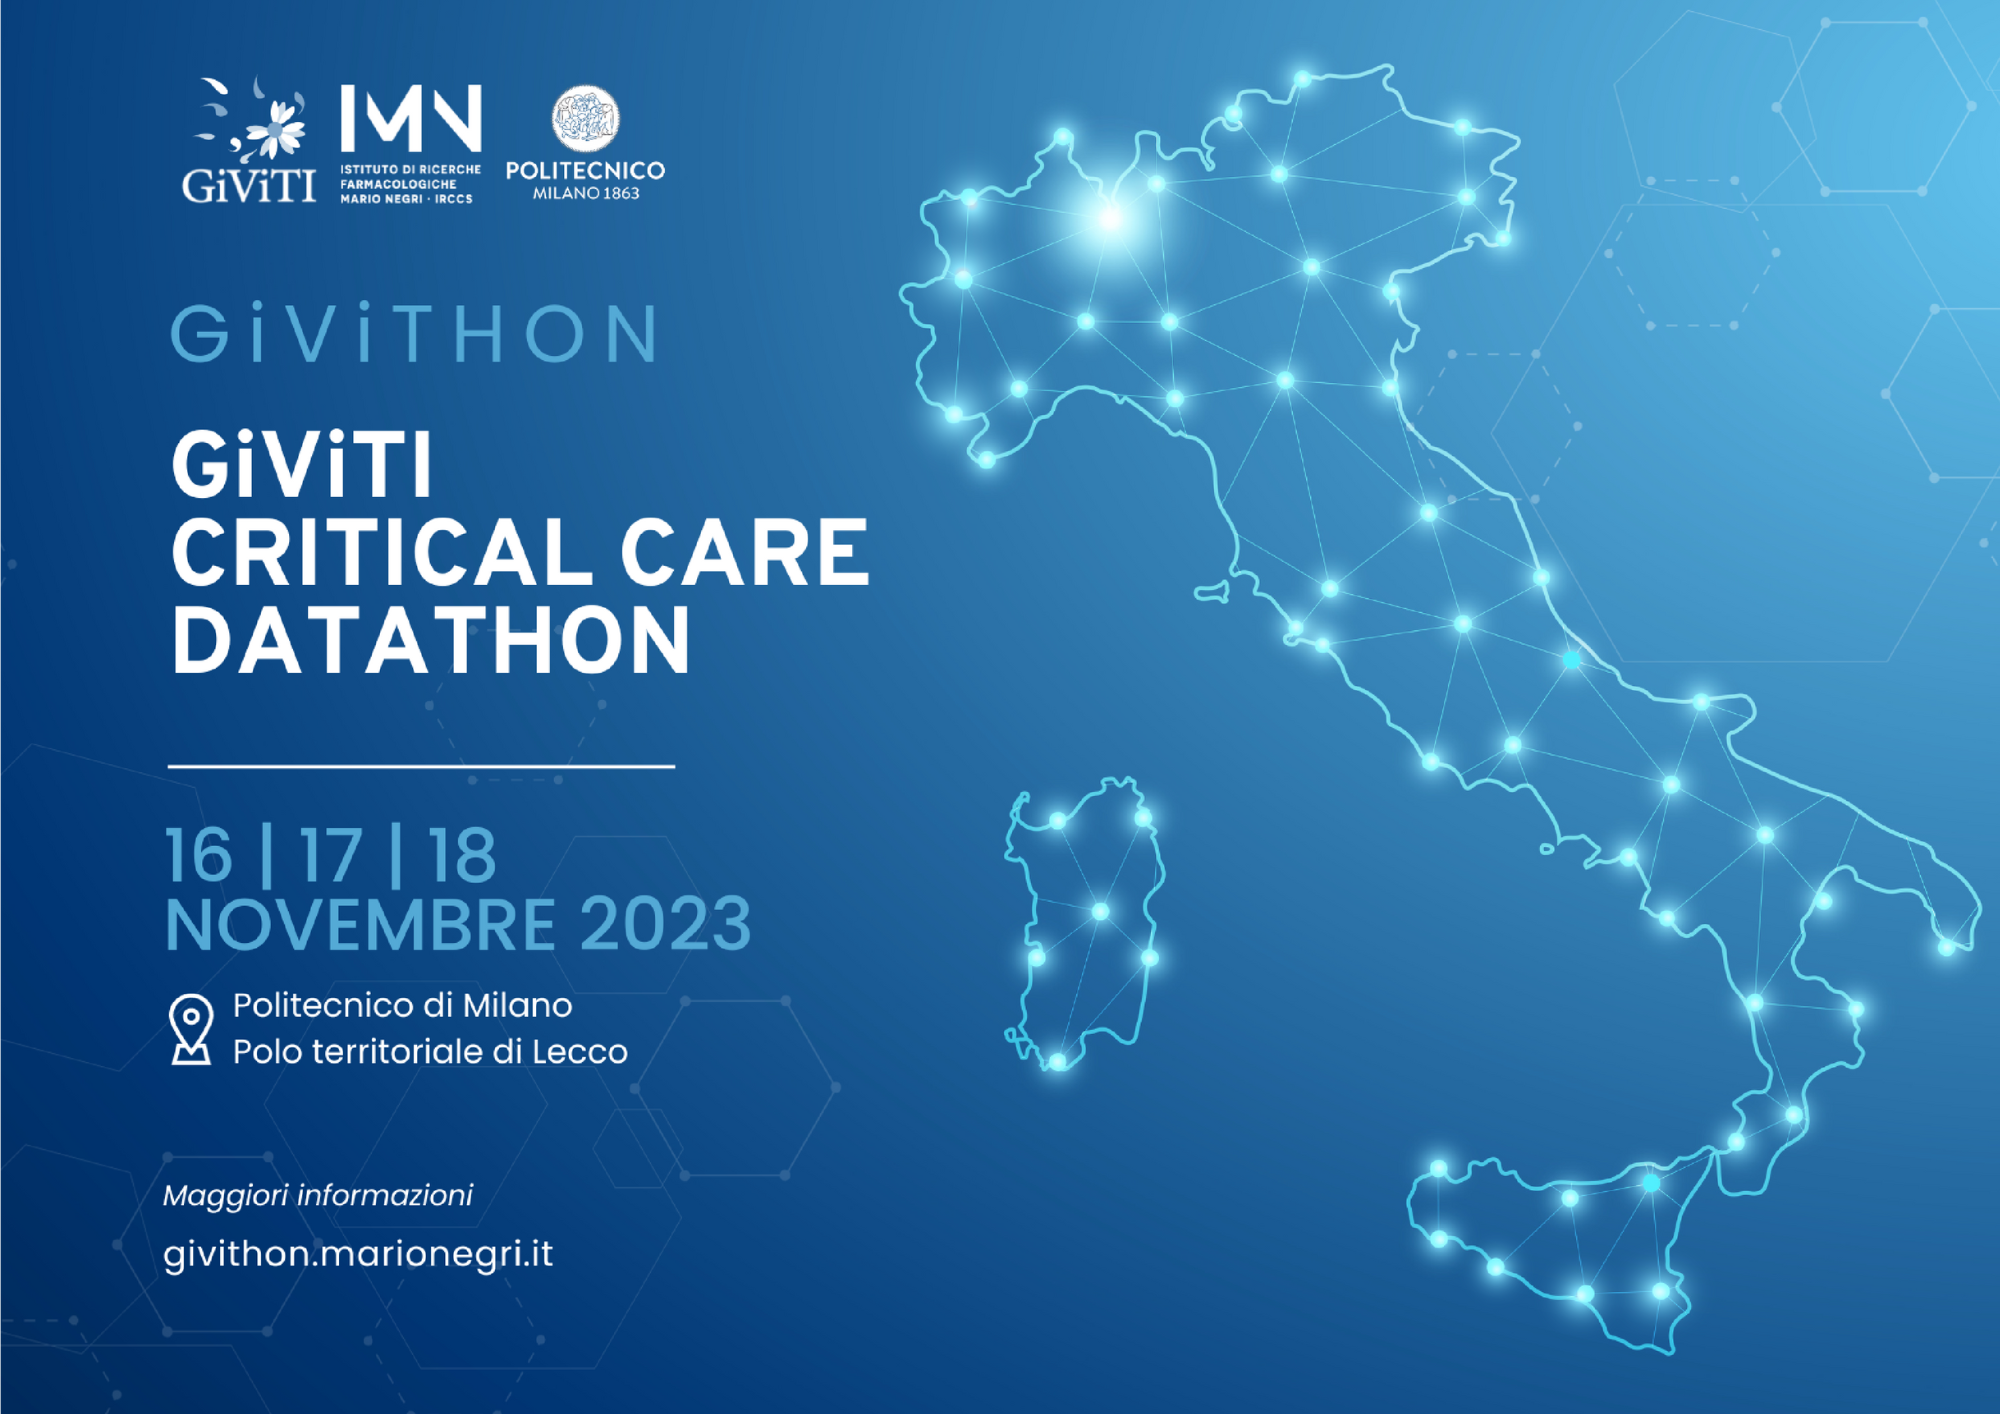 GiViTHON - GiViTI Critical Care Datathon